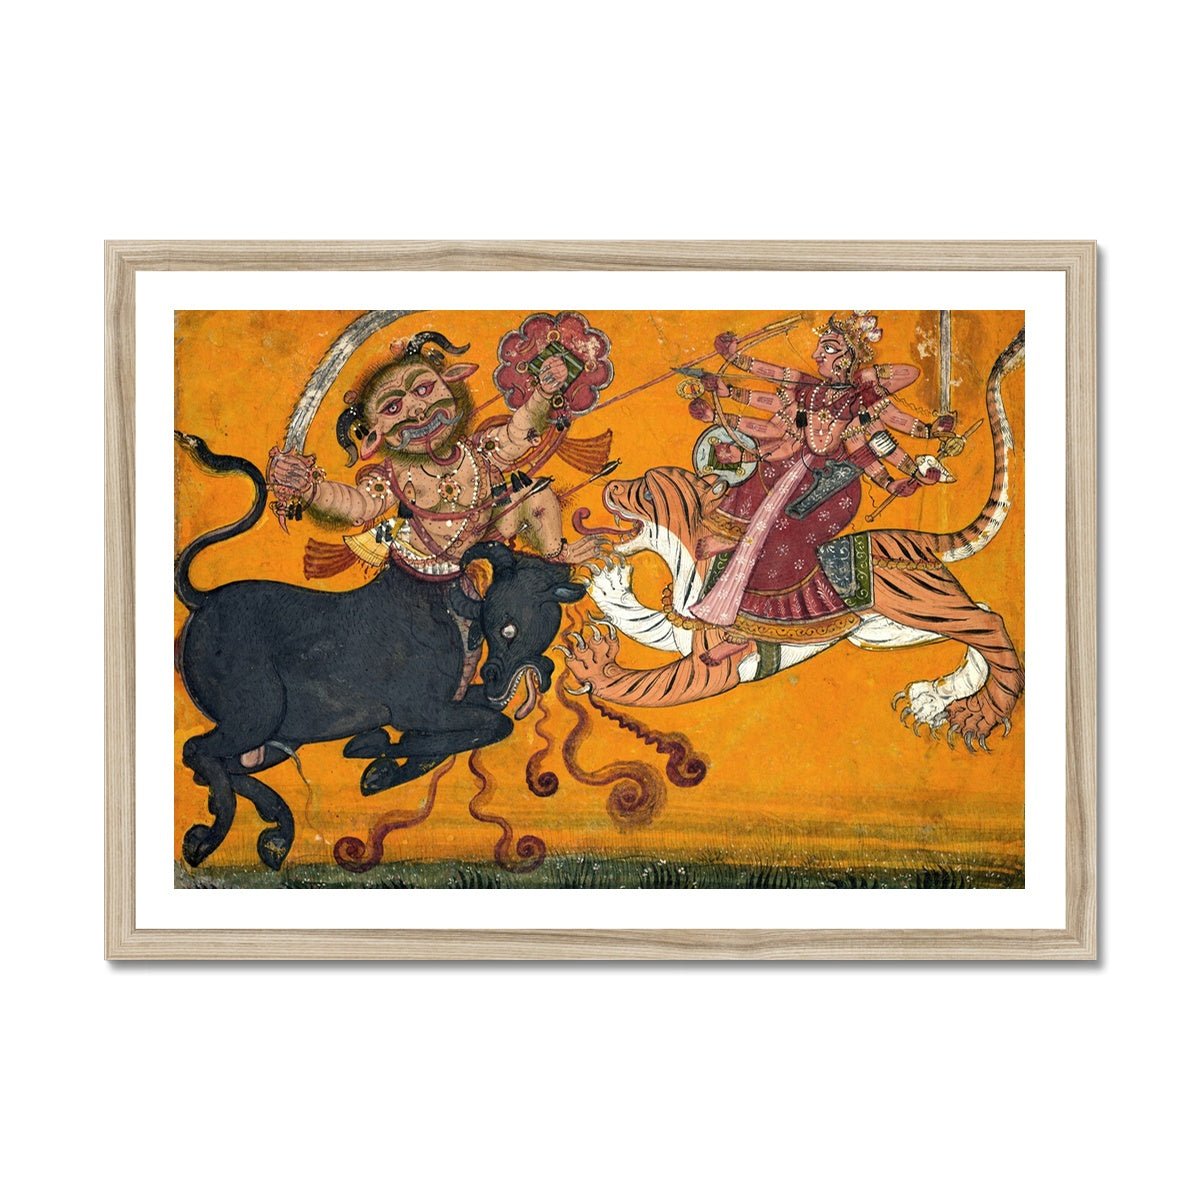 Fine art A4 Landscape / Natural Frame Durga Slaying Mahisha: Feminine Strength & Empowerment Deity | Powerful Woman Protector Goddess Framed Art Print